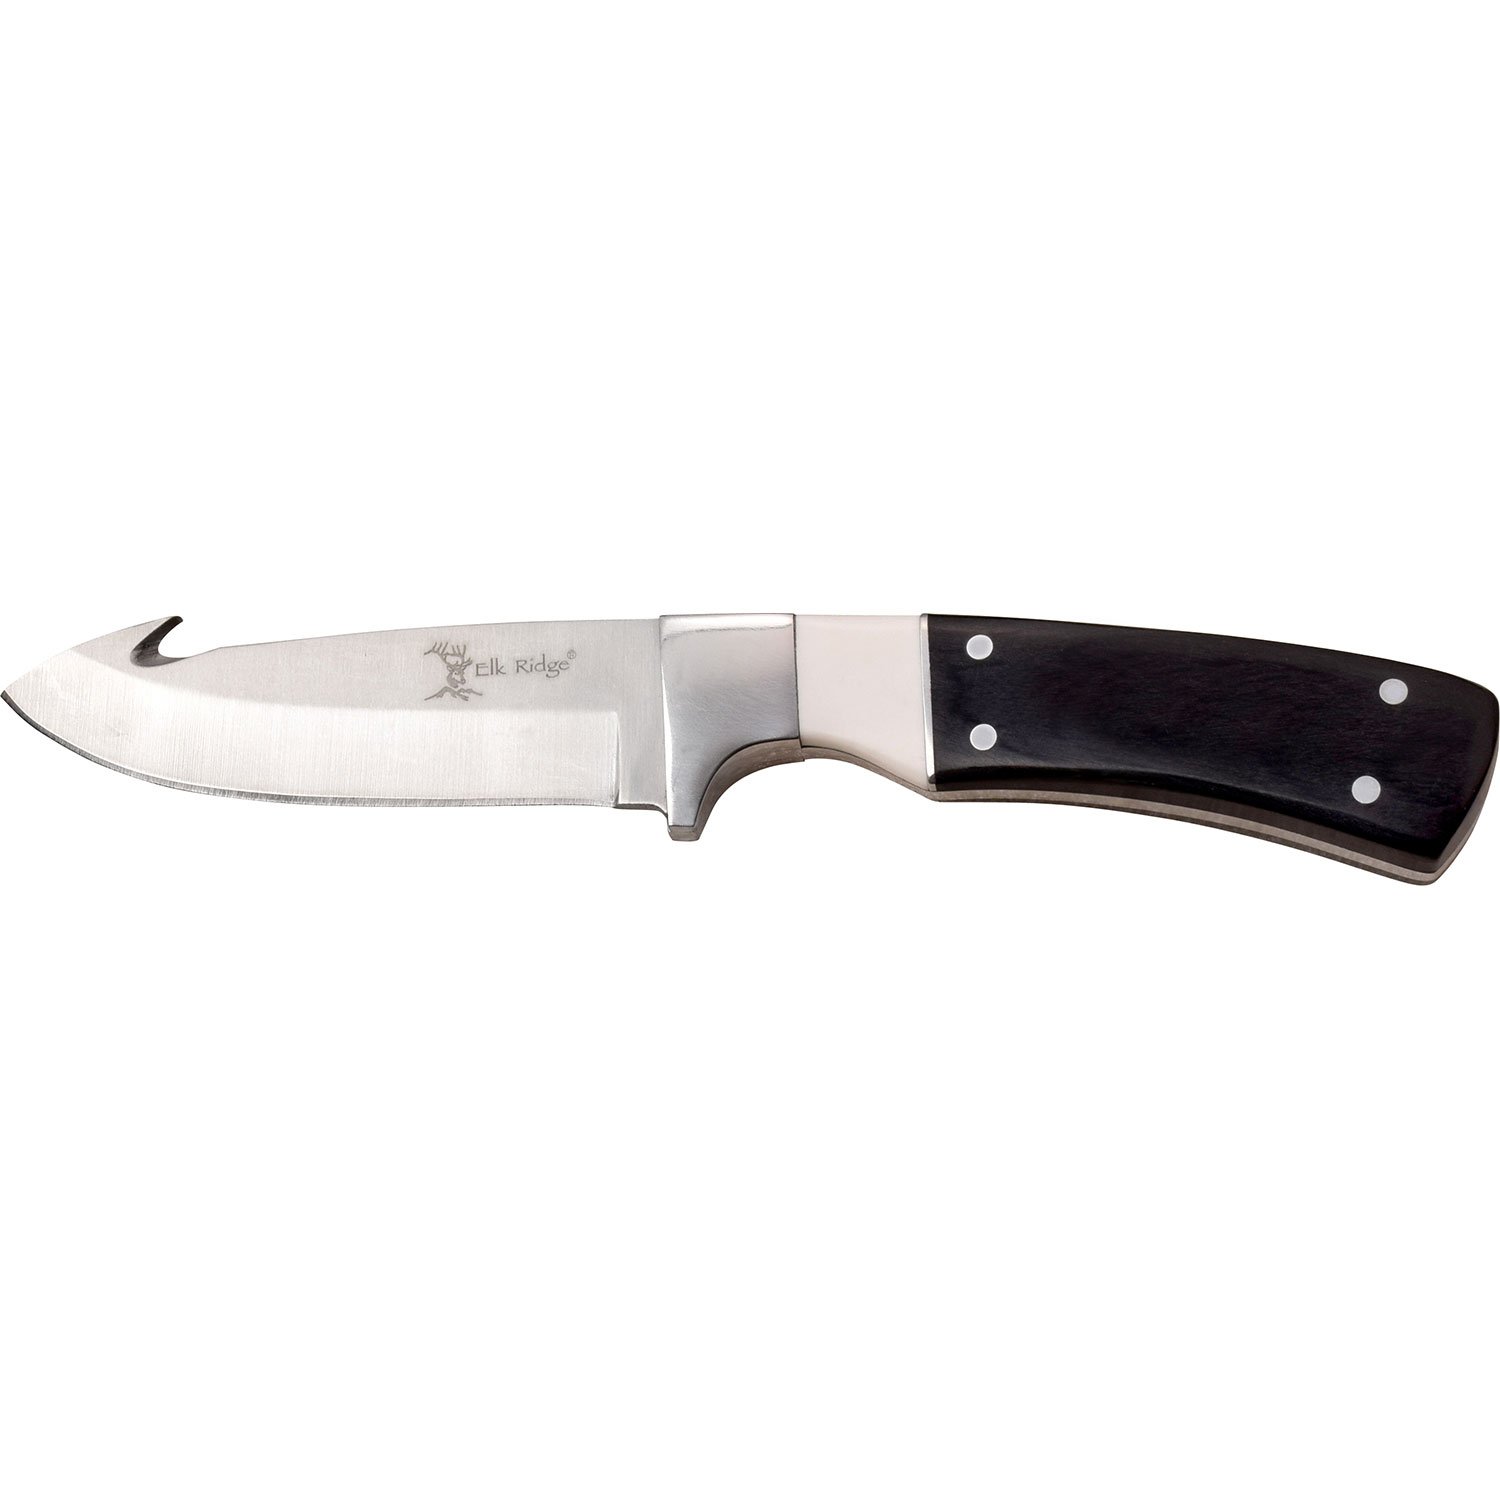 Elk Ridge Black/White Pakkawood Gut Hook Skinner Knife - Powa Beam